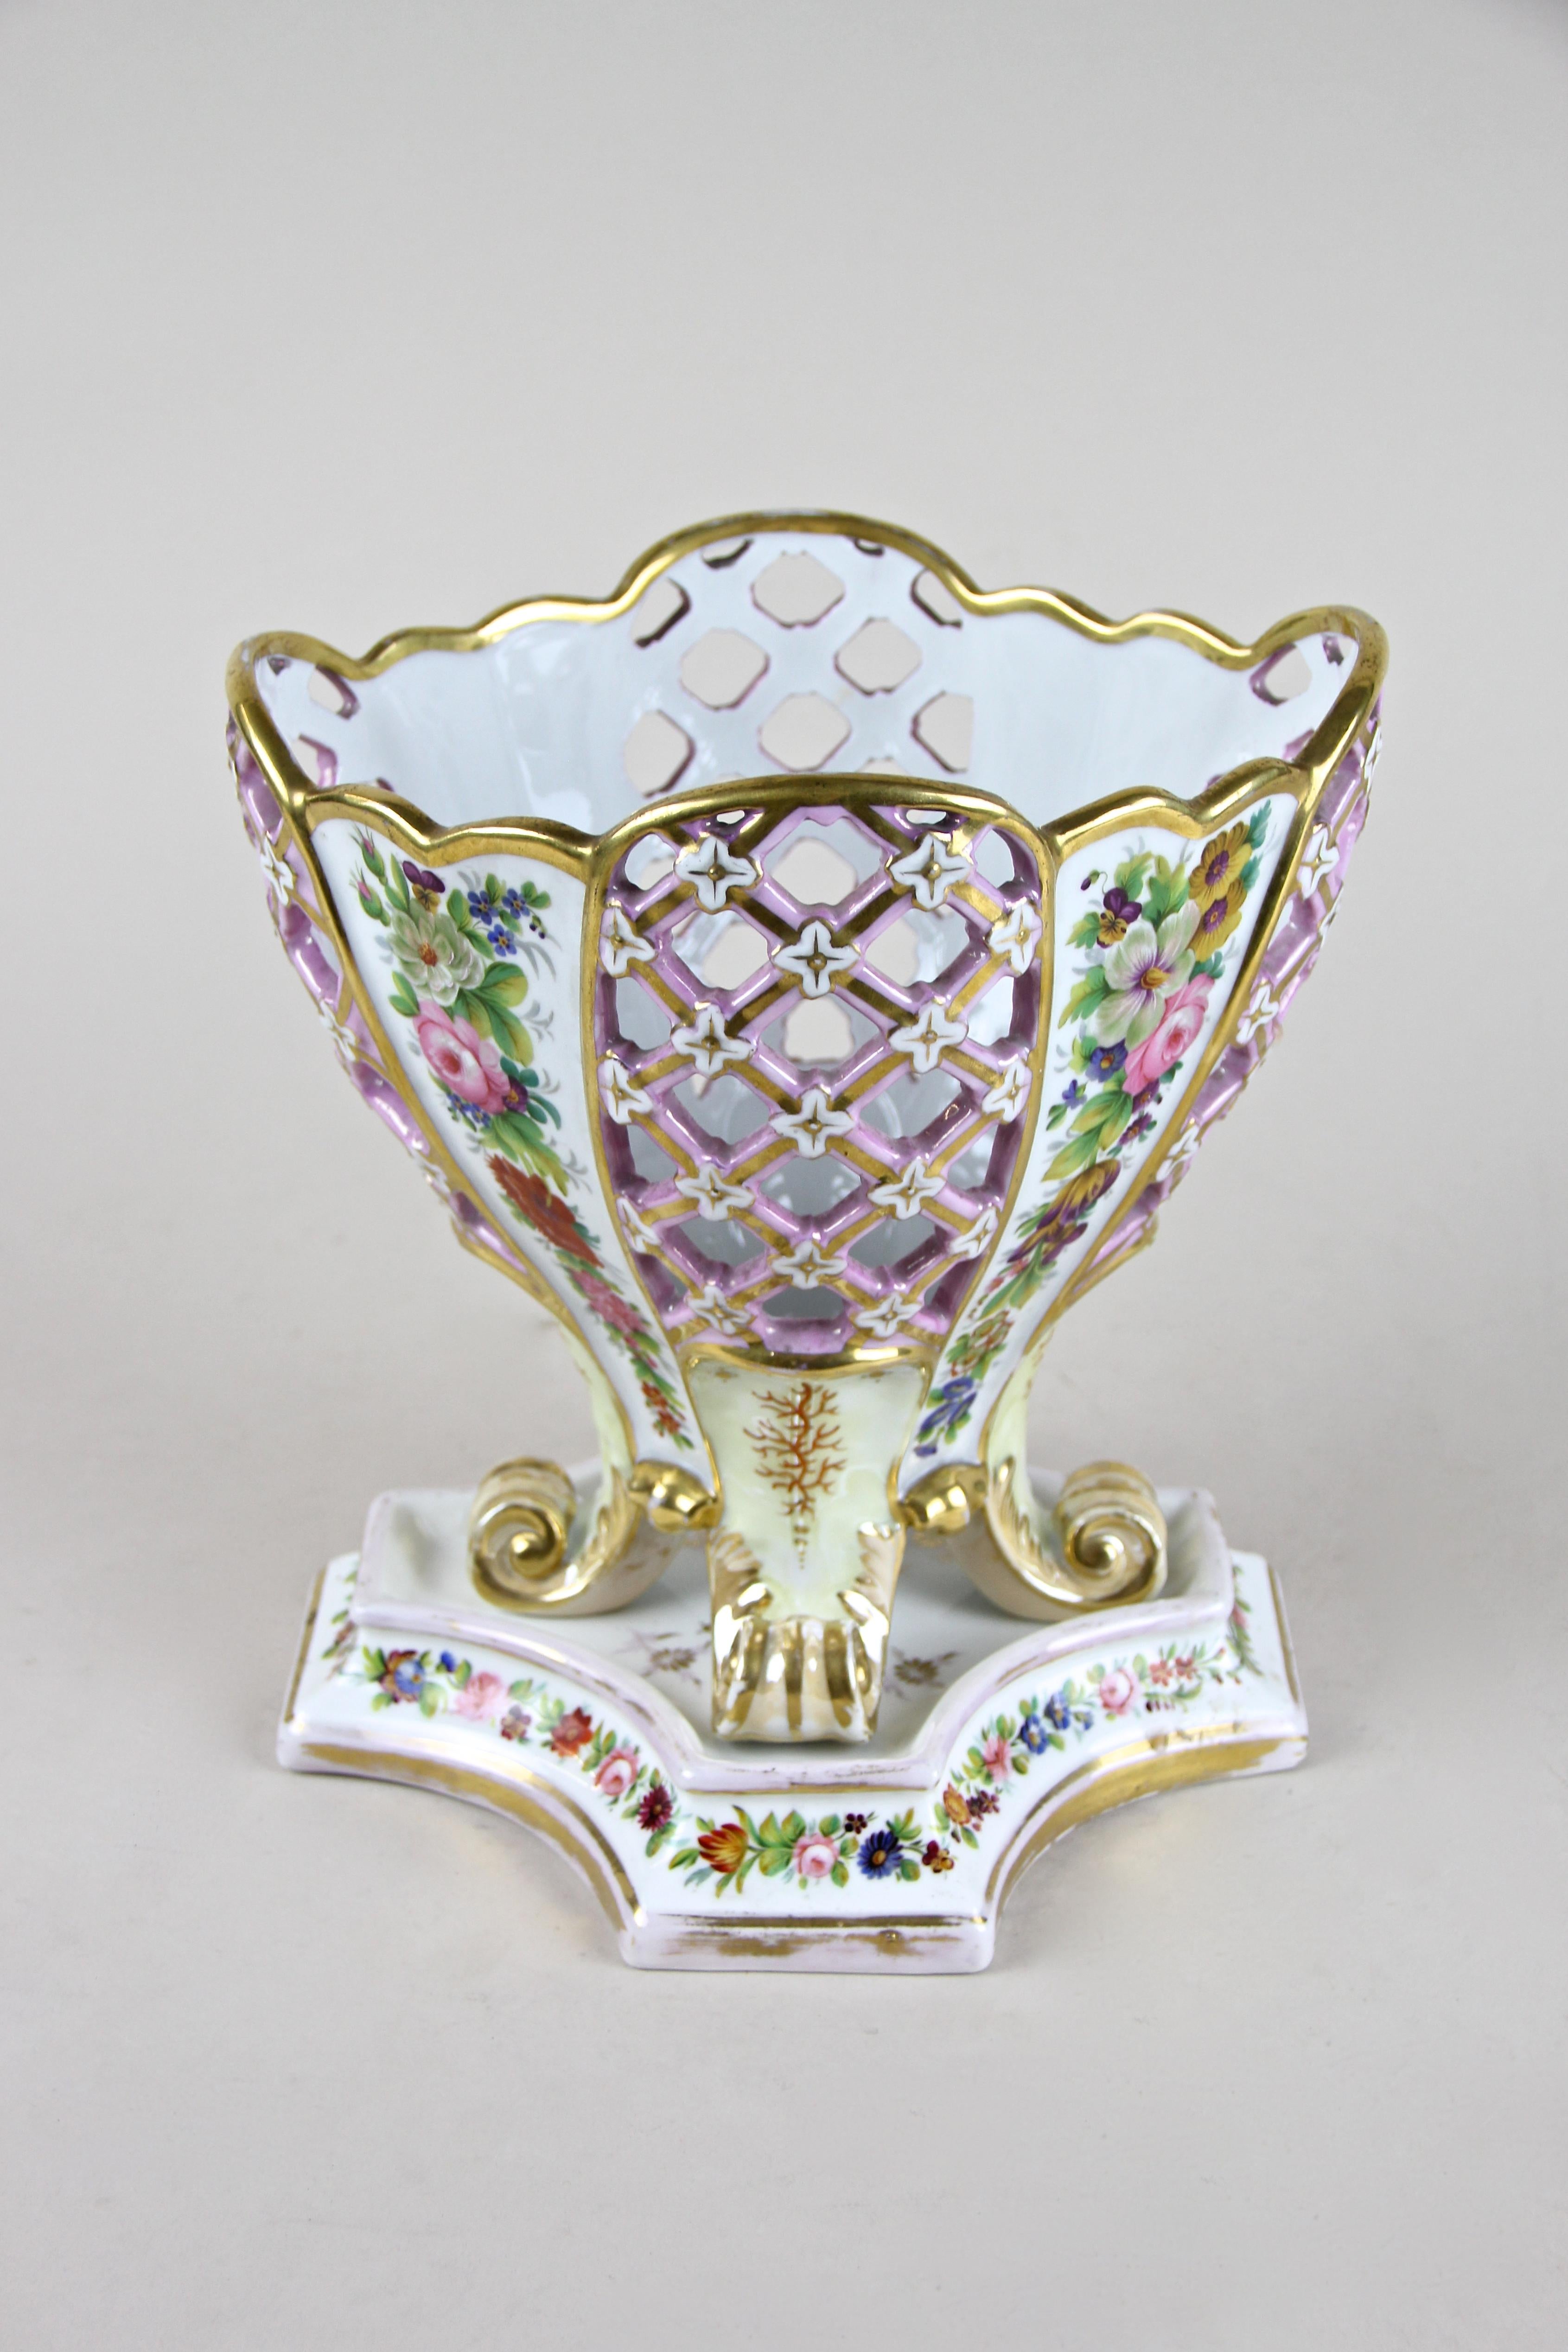 Late Biedermeier Porcelain Basket by Fischer & Mieg, Bohemia, circa 1860 (Handbemalt)